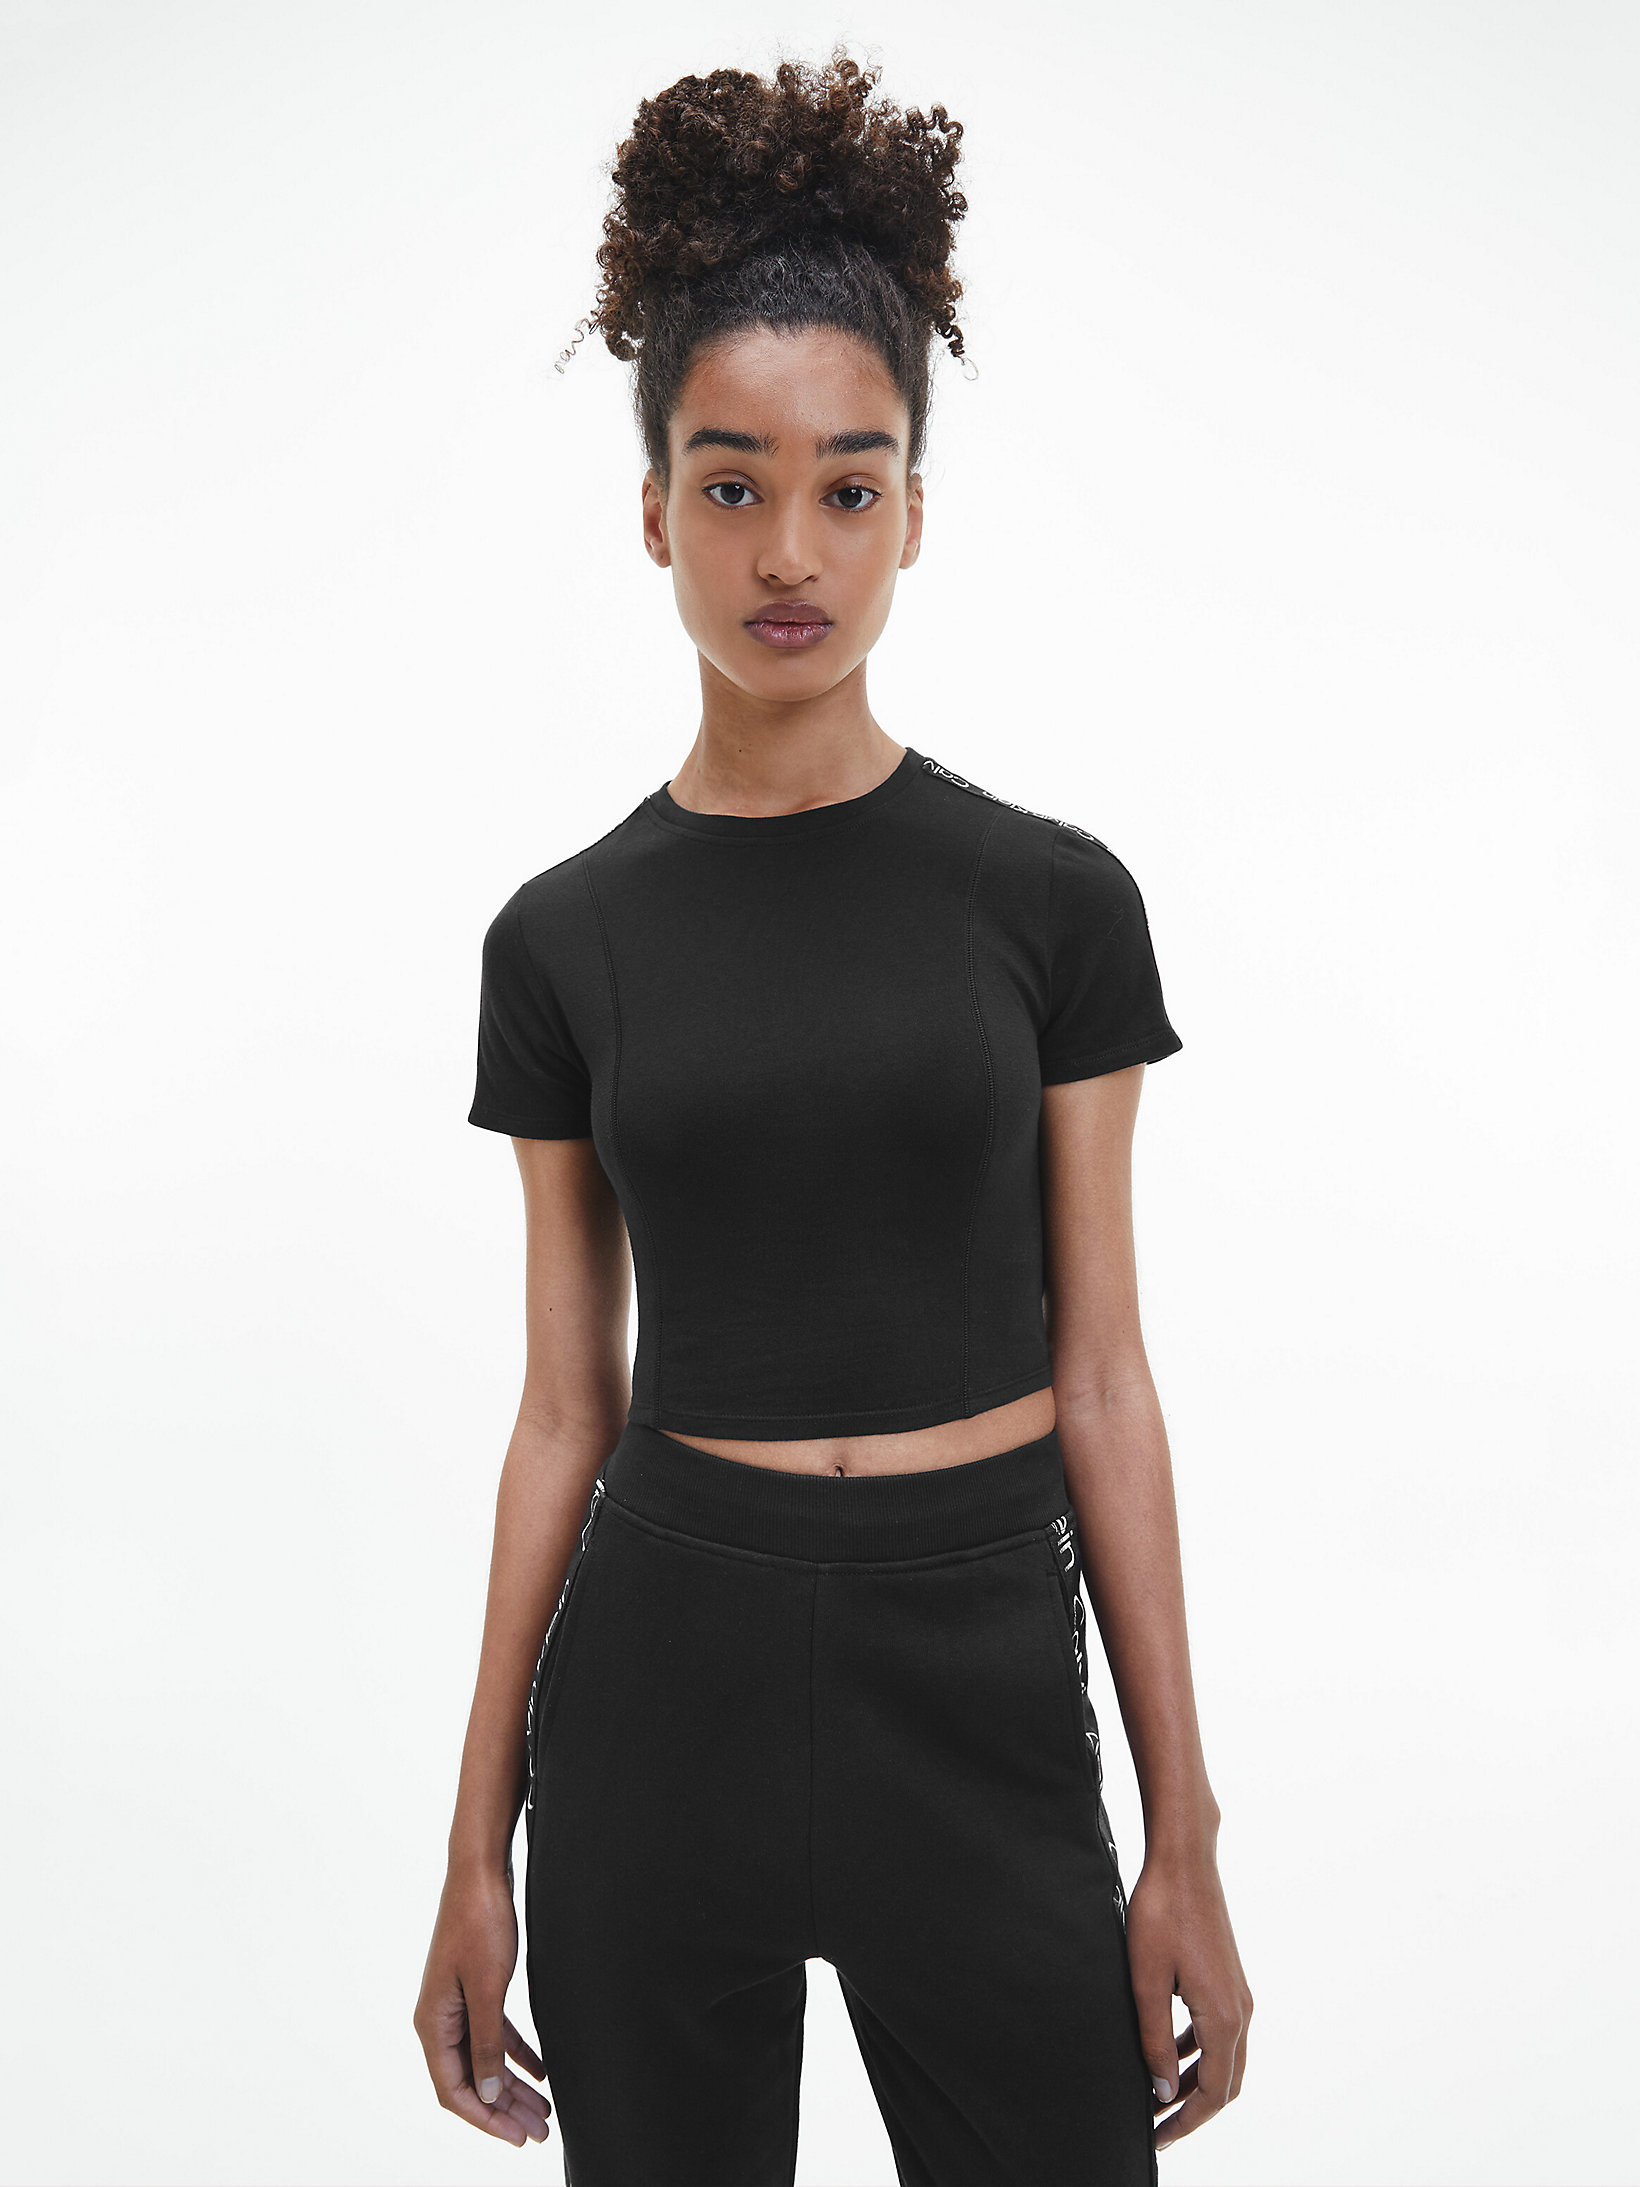 CK Black > Укороченная спортивная футболка > undefined Женщины - Calvin Klein